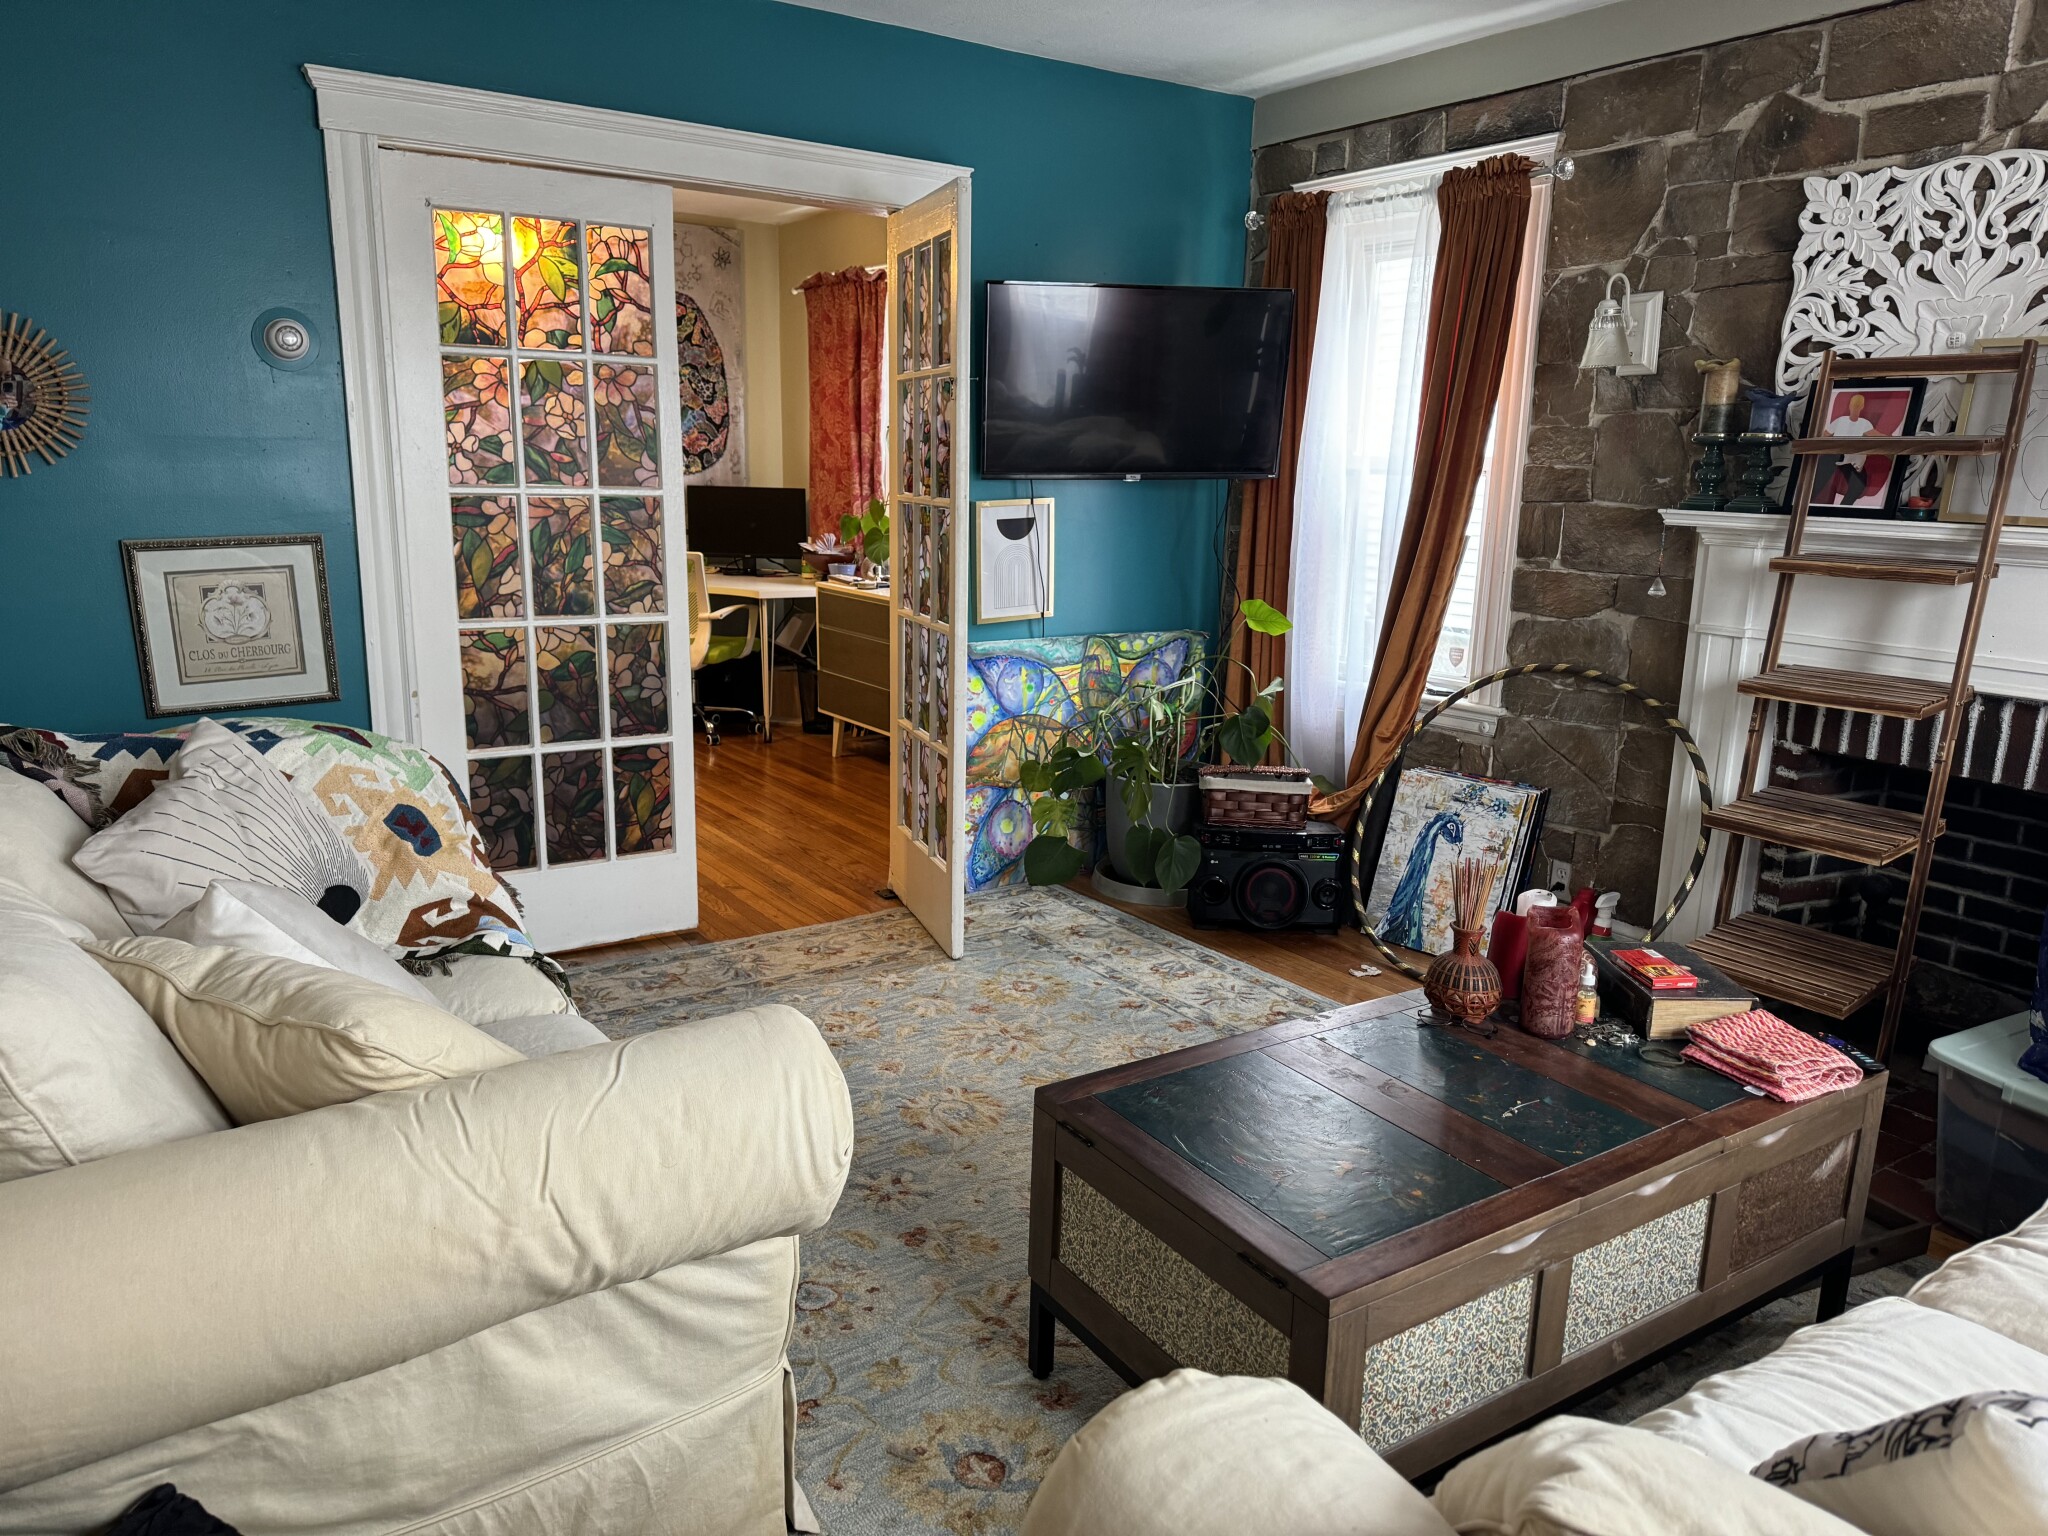 Photos of apartment on Perrin St.,Boston MA 02119